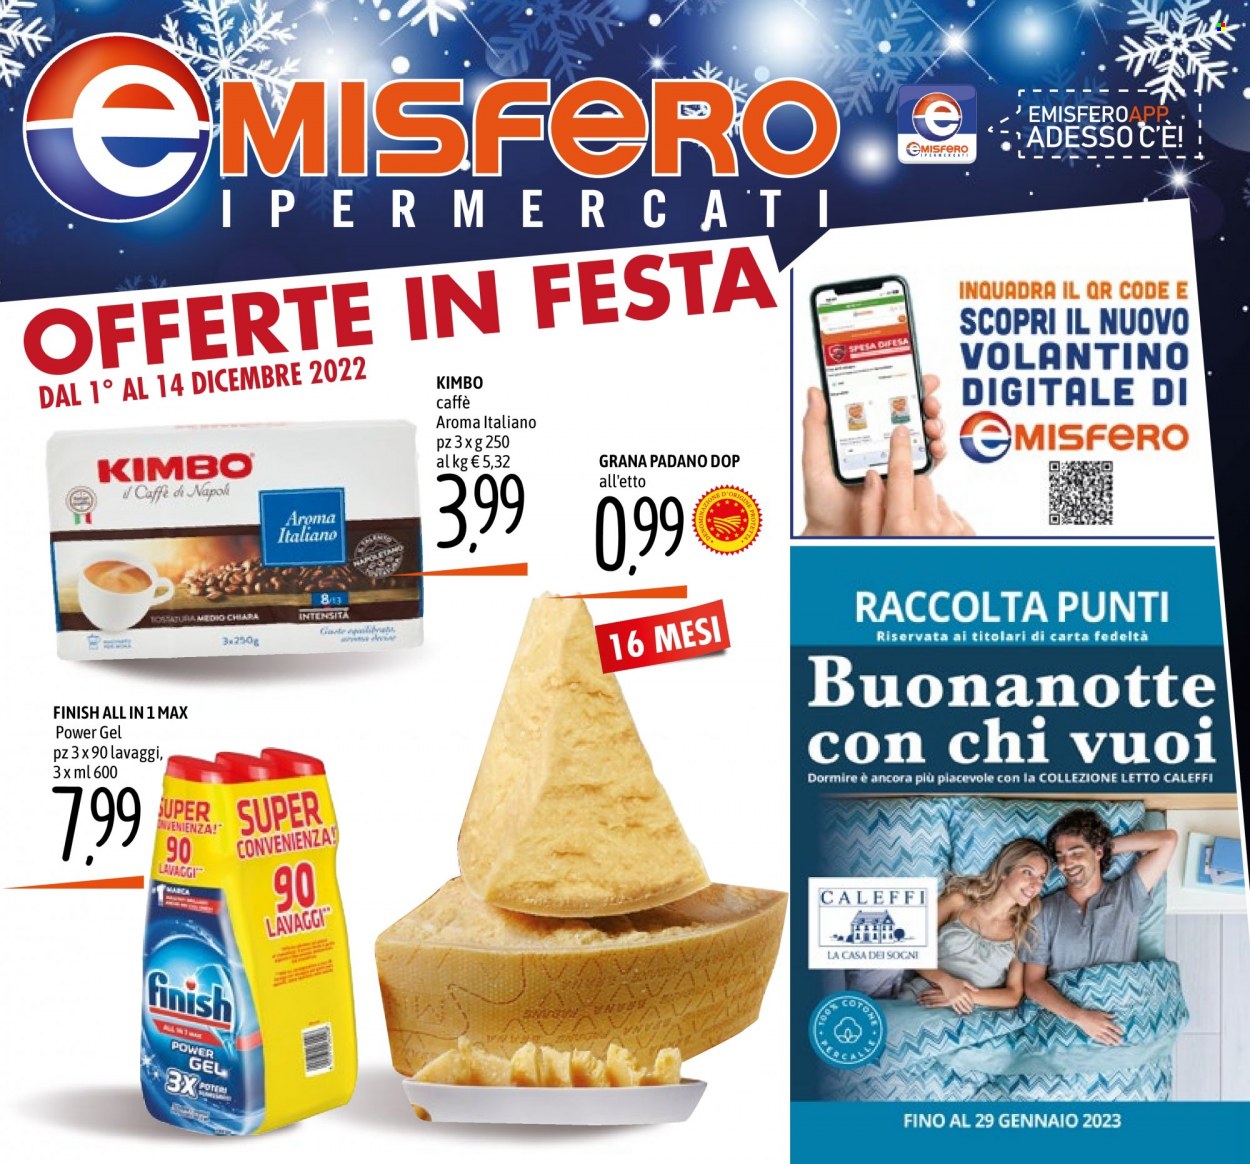 thumbnail - Volantino Emisfero - 1/12/2022 - 14/12/2022 - Prodotti in offerta - formaggio, Grana Padano, Kimbo, Finish. Pagina 1.